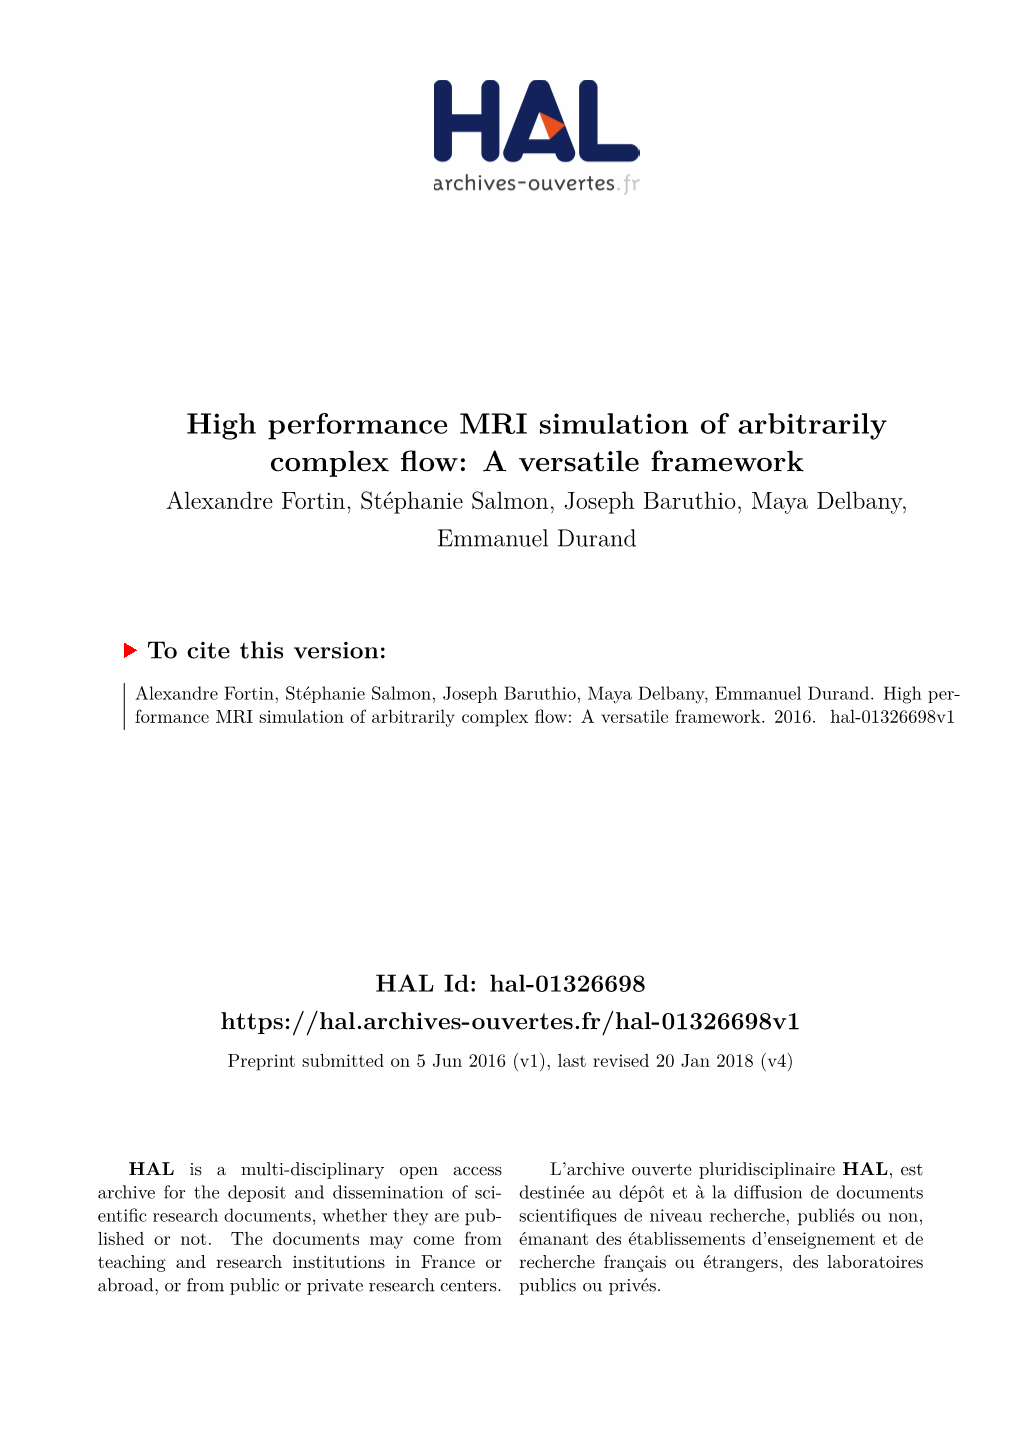 High Performance MRI Simulation of Arbitrarily Complex Flow: a Versatile Framework Alexandre Fortin, Stéphanie Salmon, Joseph Baruthio, Maya Delbany, Emmanuel Durand